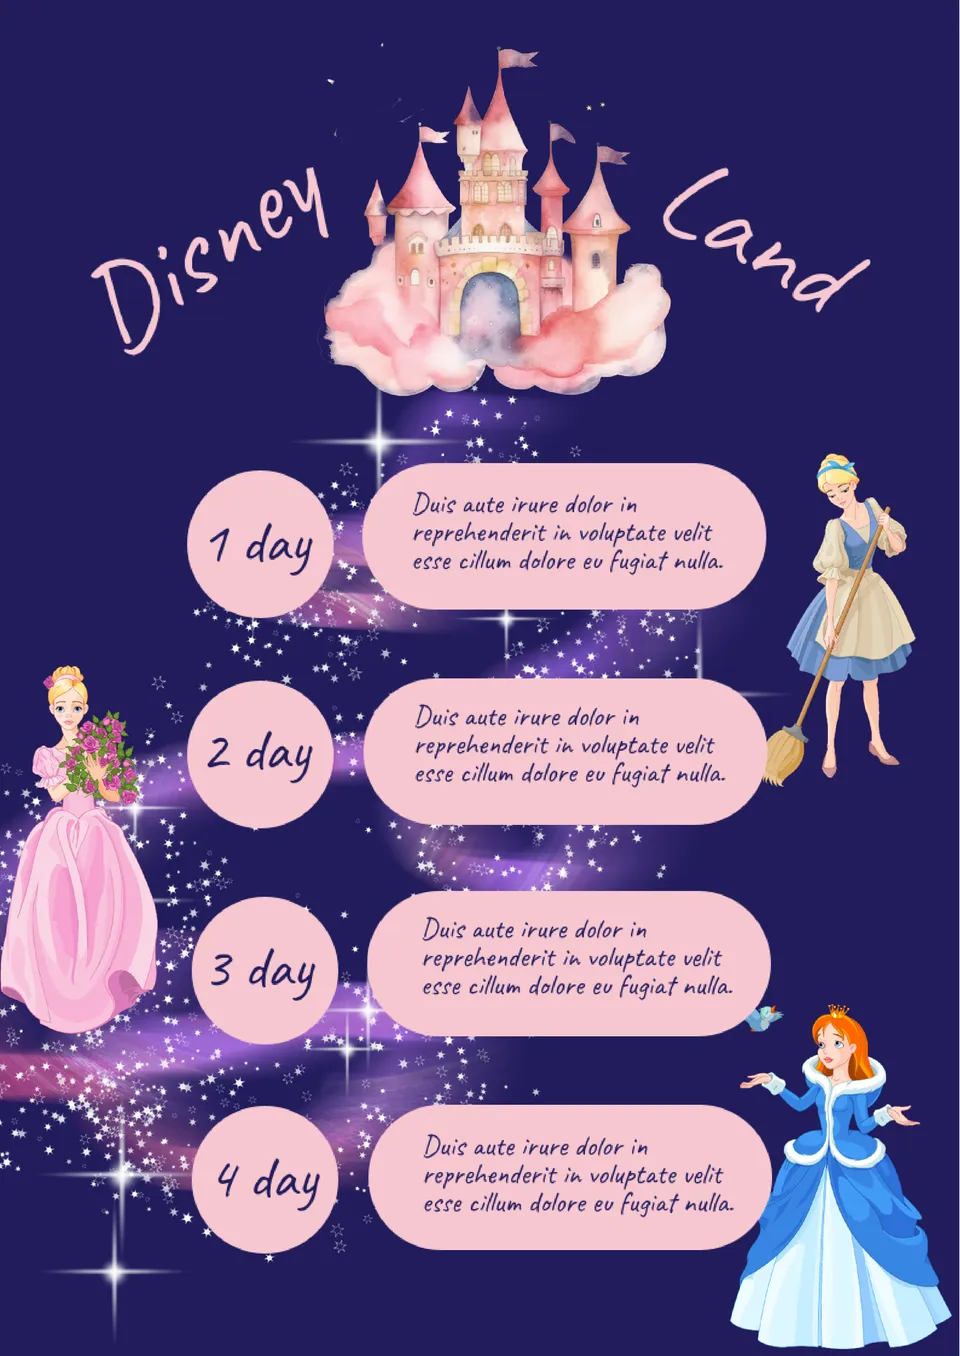 Disney Itinerary Template